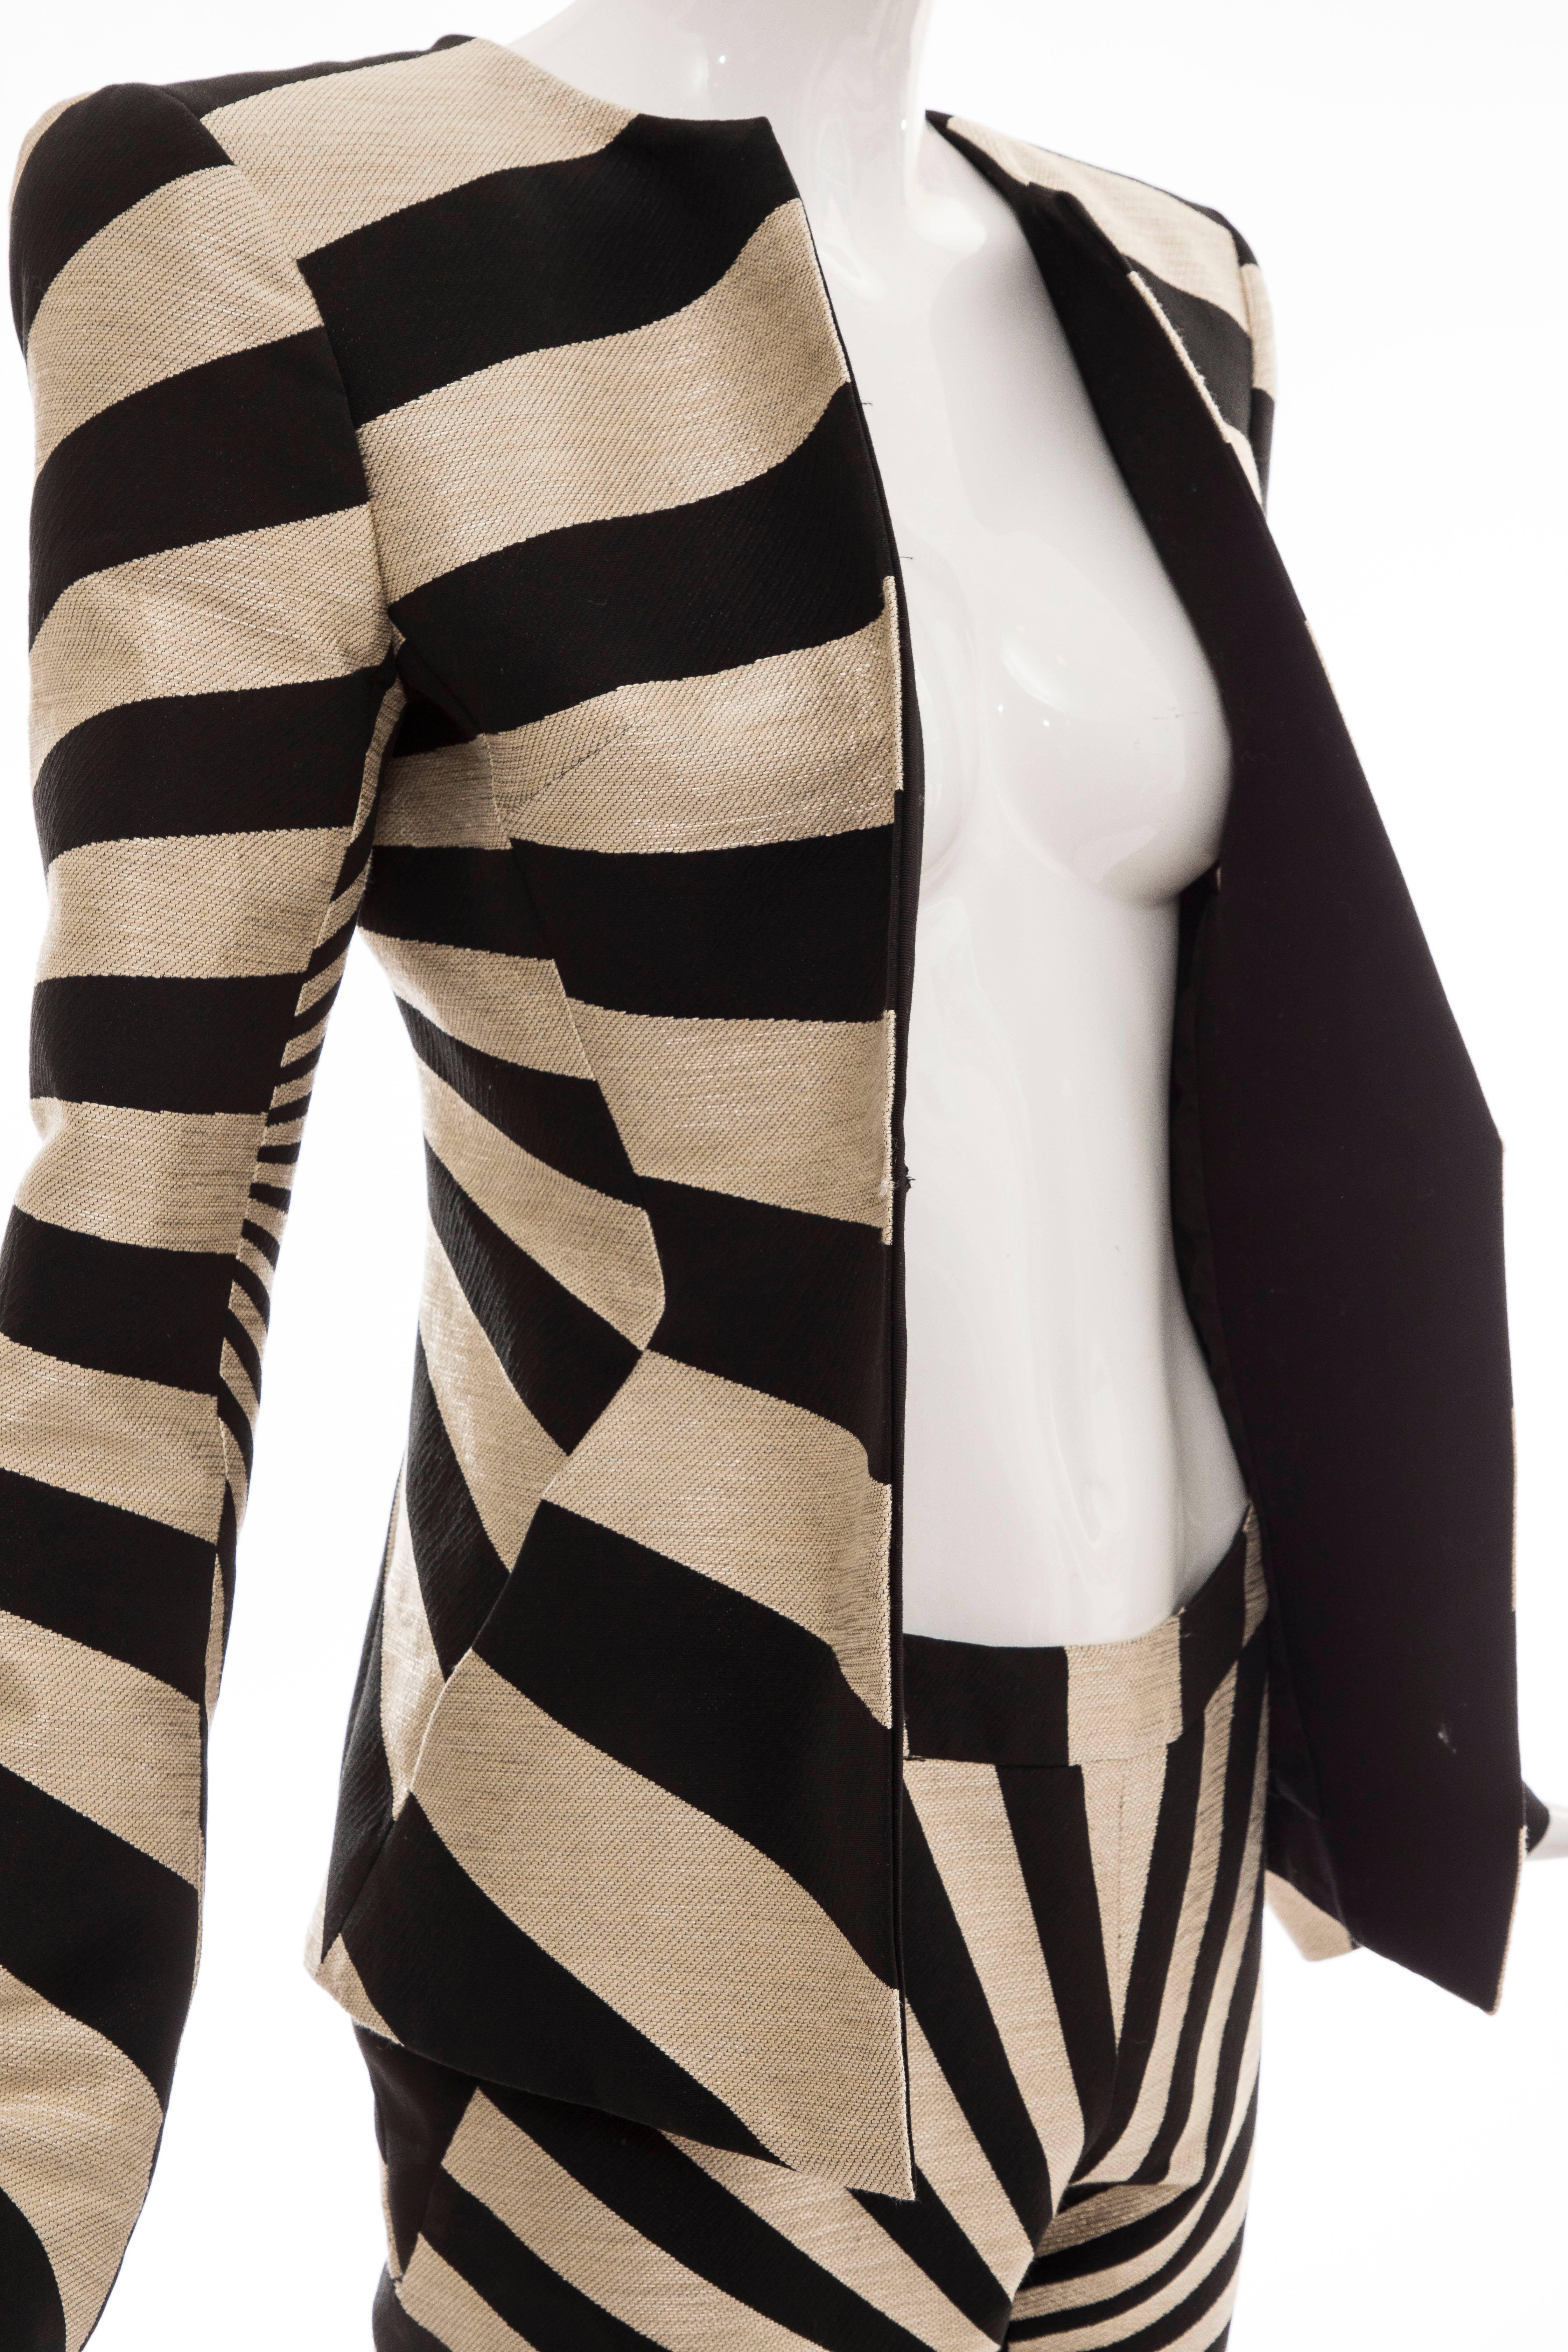 Gareth Pugh Woven Striped Pattern Pantsuit, Spring 2017 For Sale 9